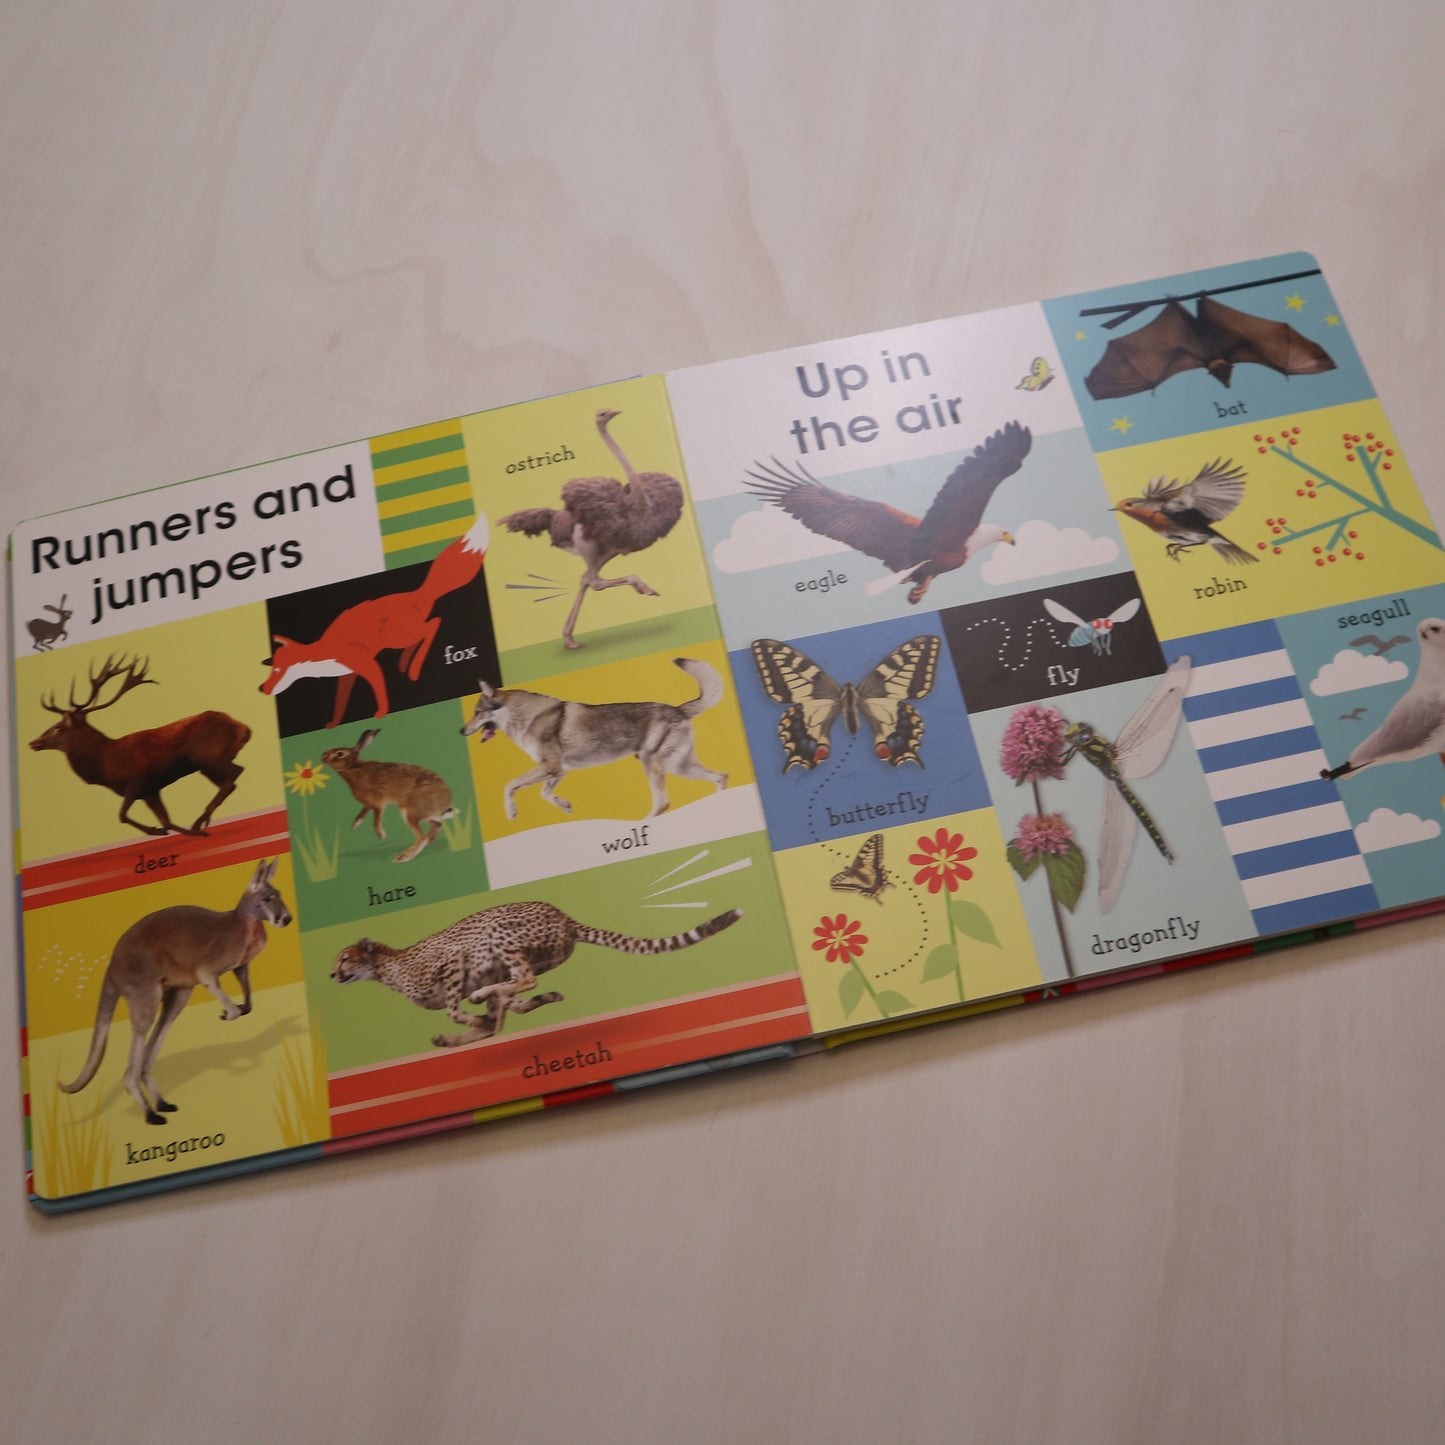 100 First Animals - Board Book